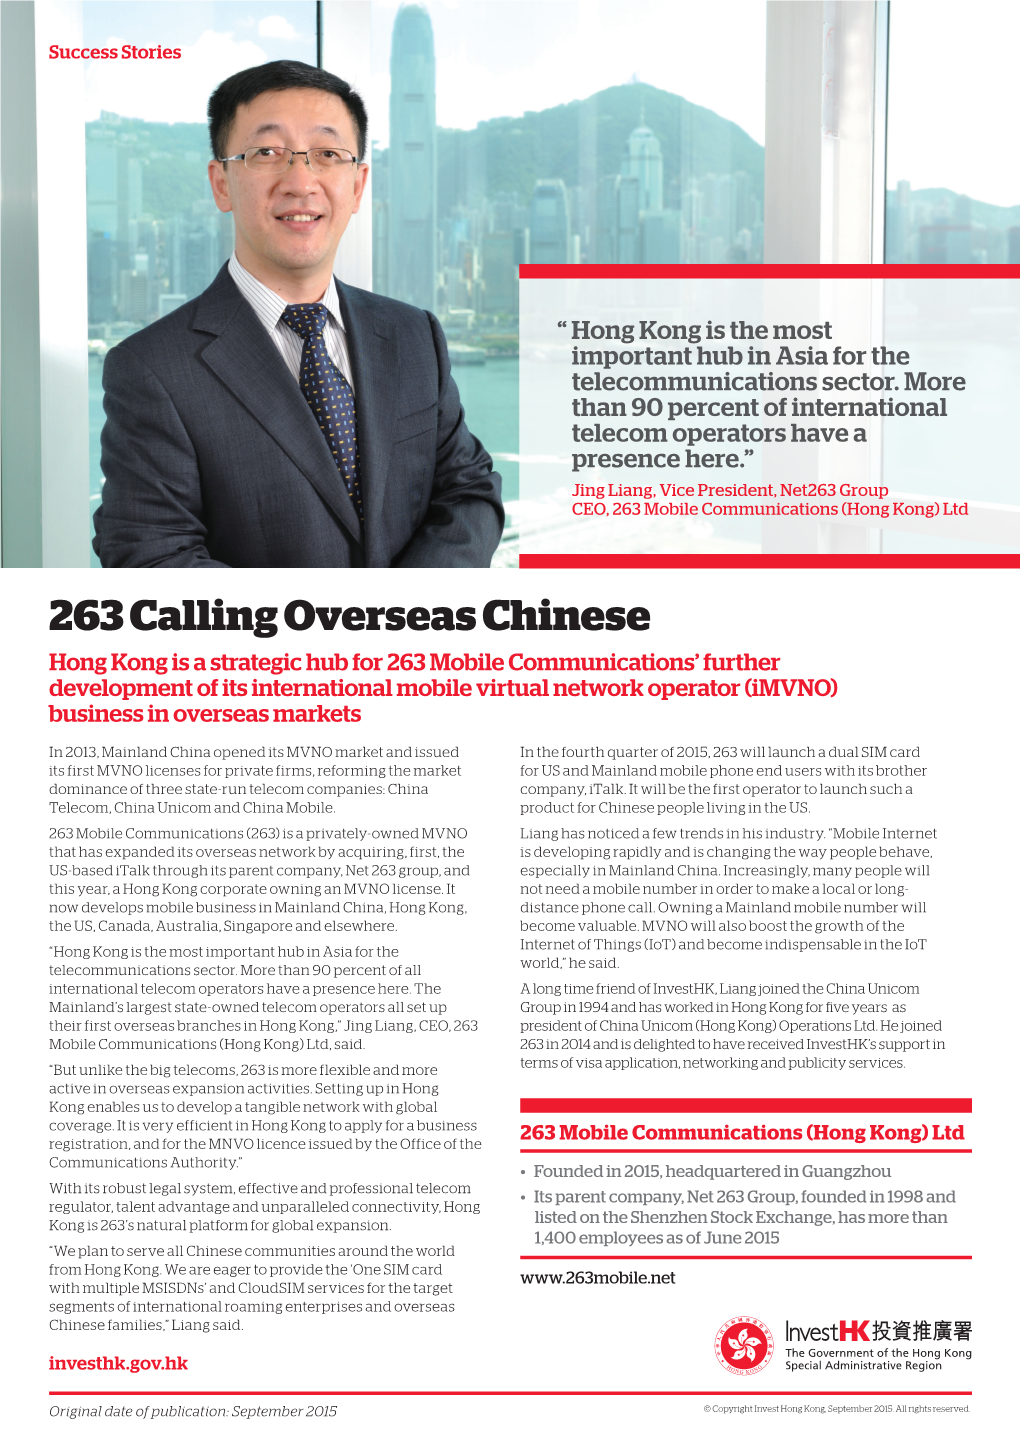 263 Mobile Communications (Hong Kong) Ltd